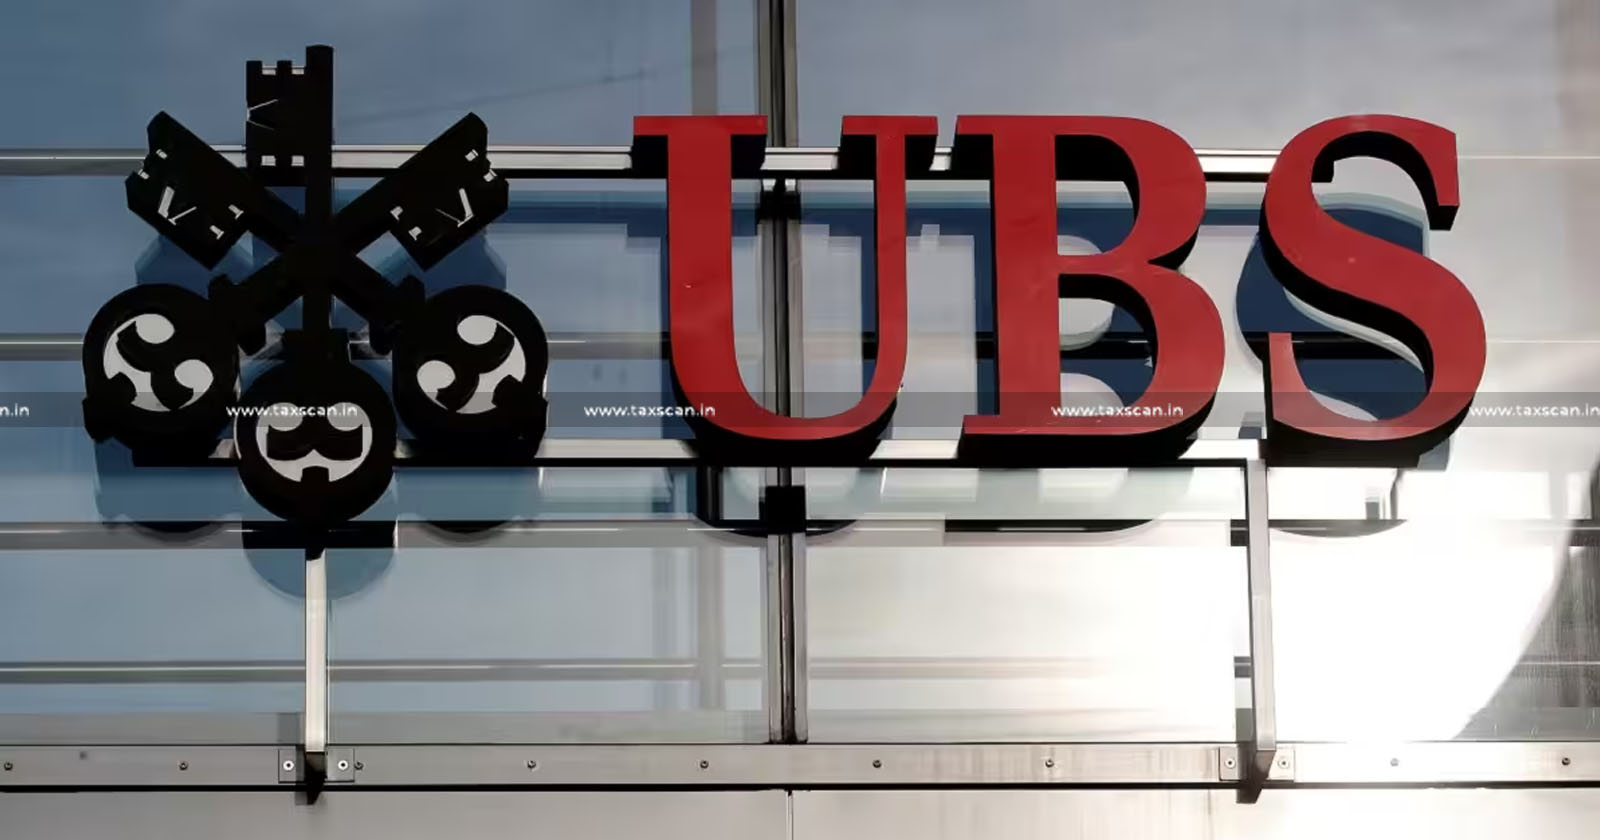 CA - Vacancy - UBS - CA Vacancy in UBS - CA Vacancy - Vacancy in UBS - jobscan - taxscan